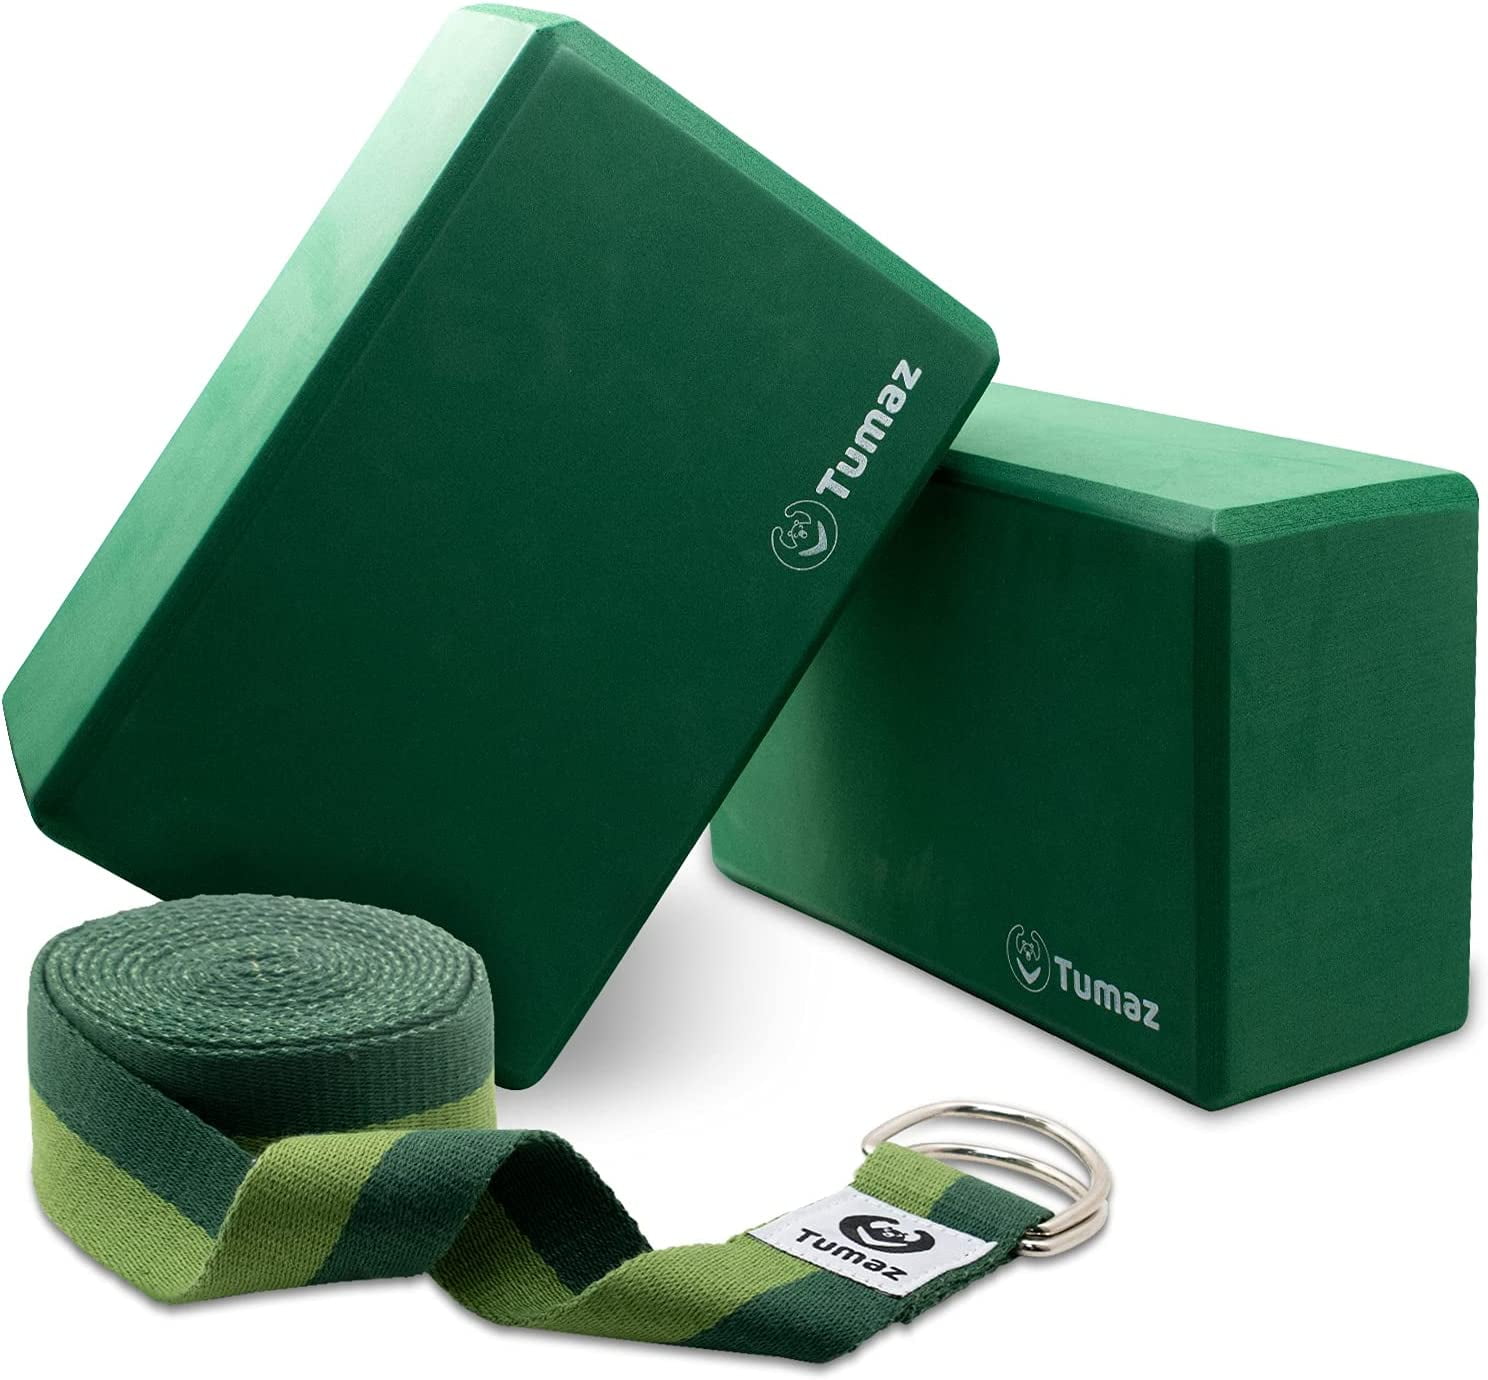 Tumaz Yoga Blocks 2 Pack with Strap, Lightweight Foam Yoga